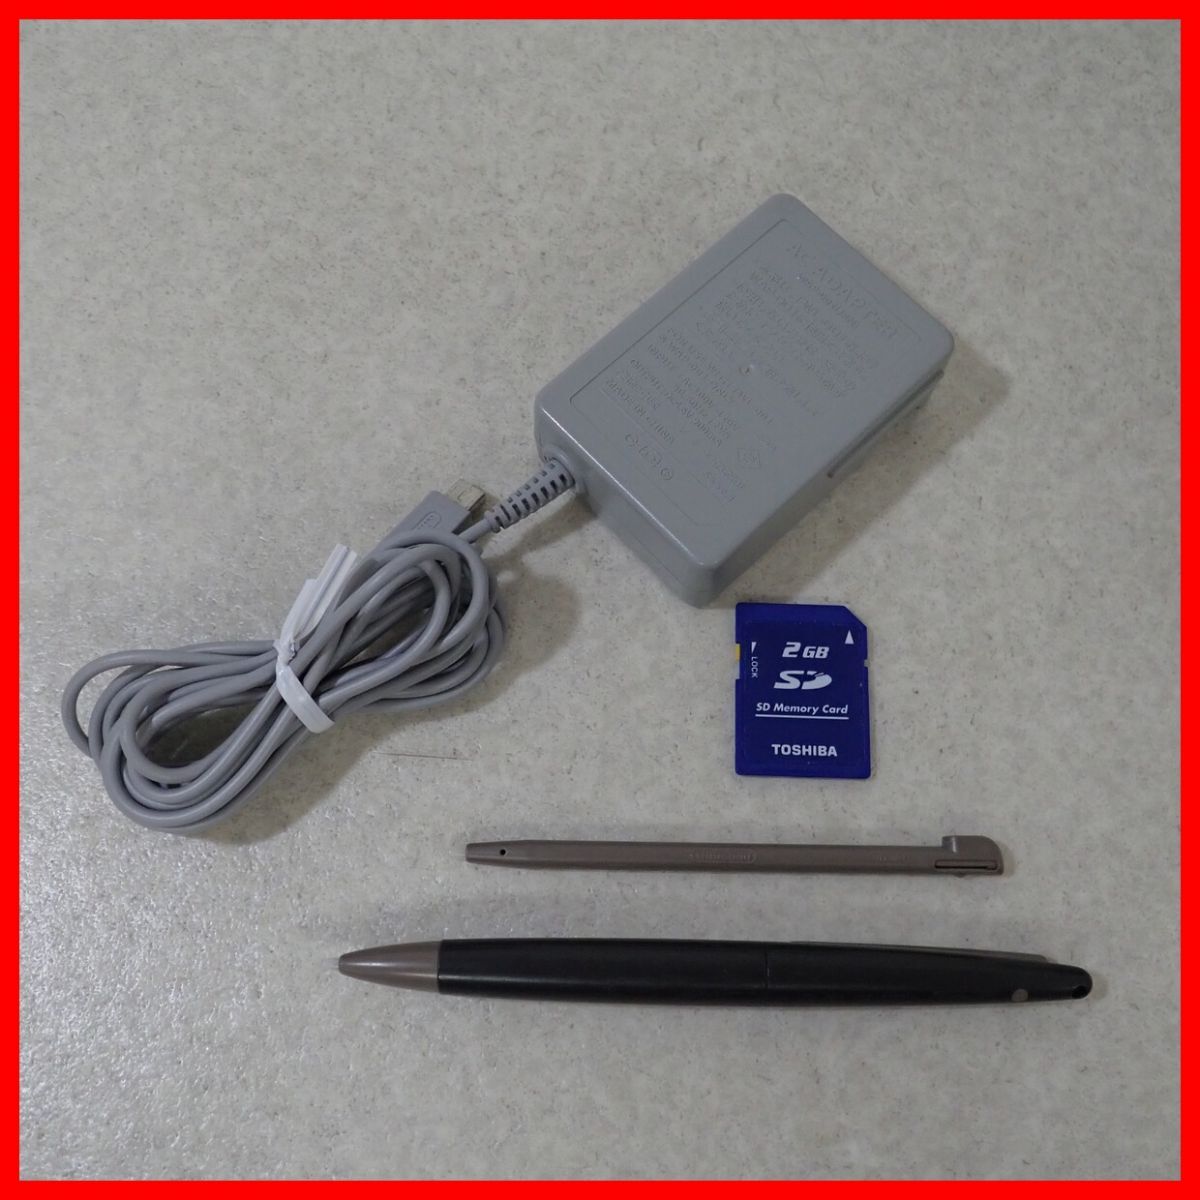  рабочий товар Nintendo DSiLL корпус UTL-001 темно-коричневый nintendo Nintendo коробка мнение есть [10